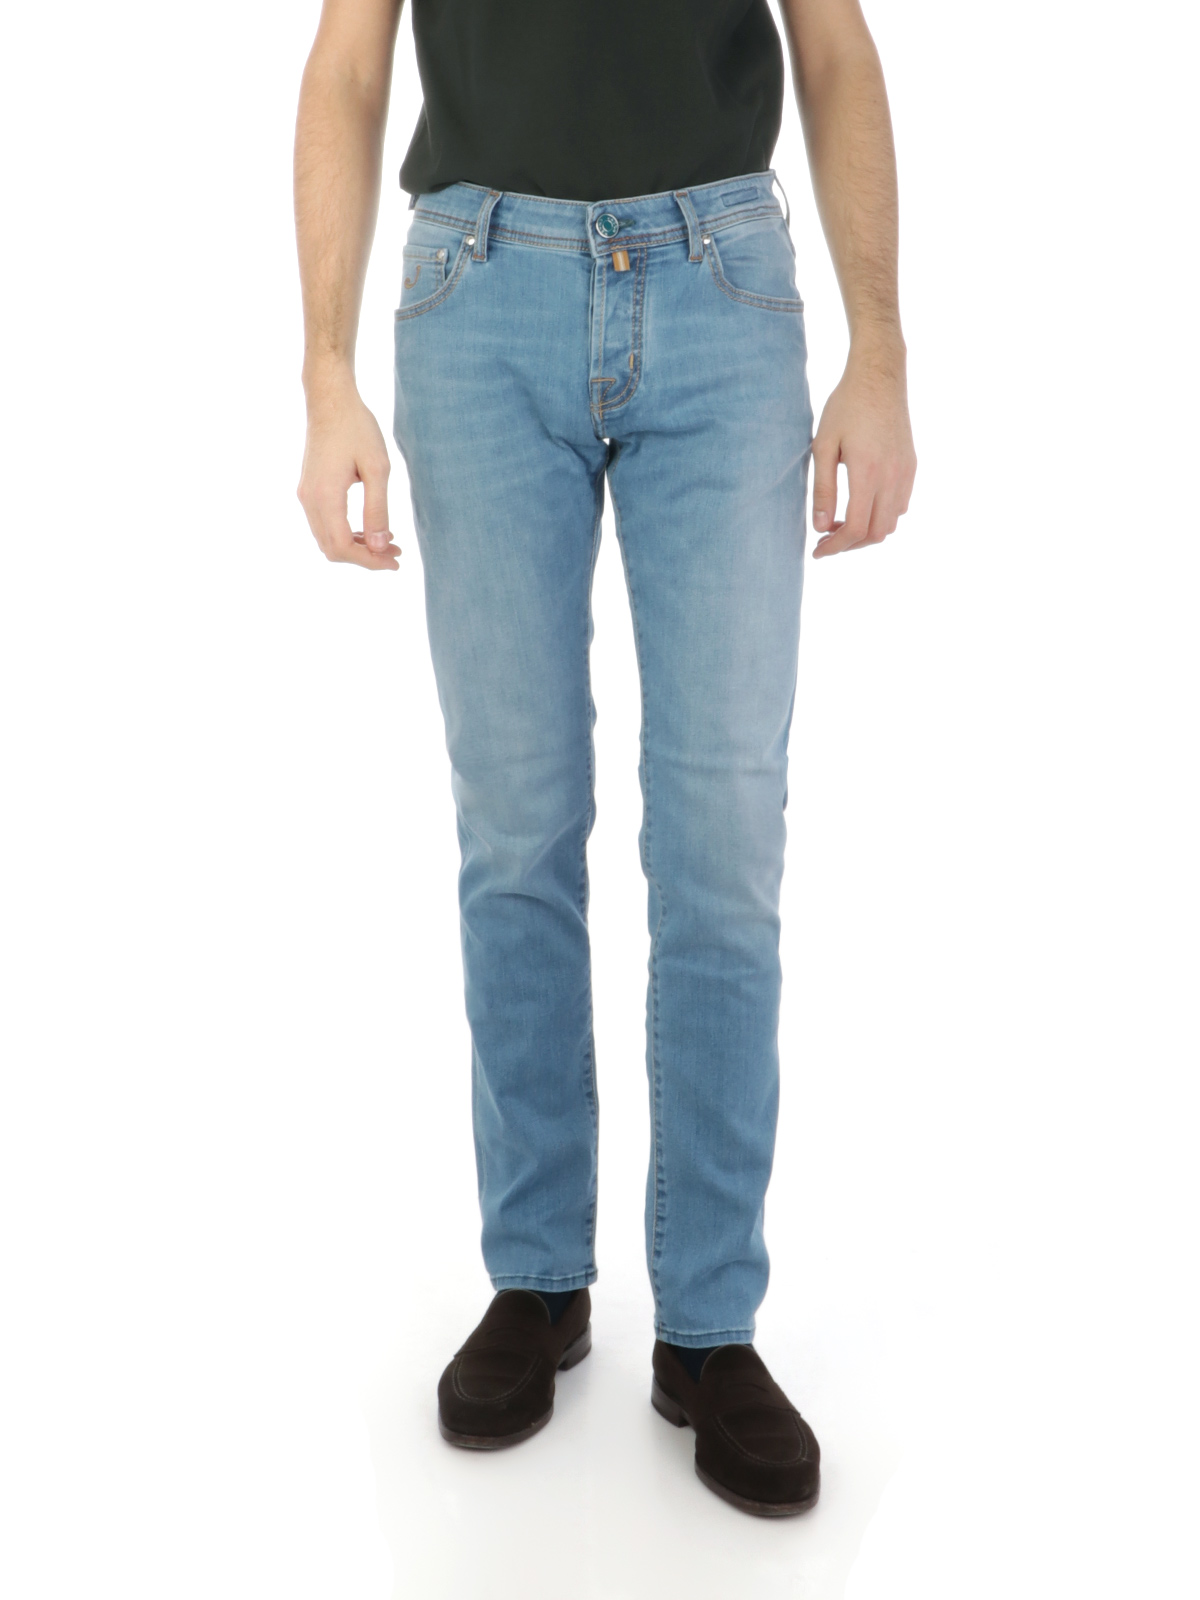 JACOB COHEN Nick Slim Fit Men's 5 Pocket Jeans Light Denim, U Q E06 40 S  3623